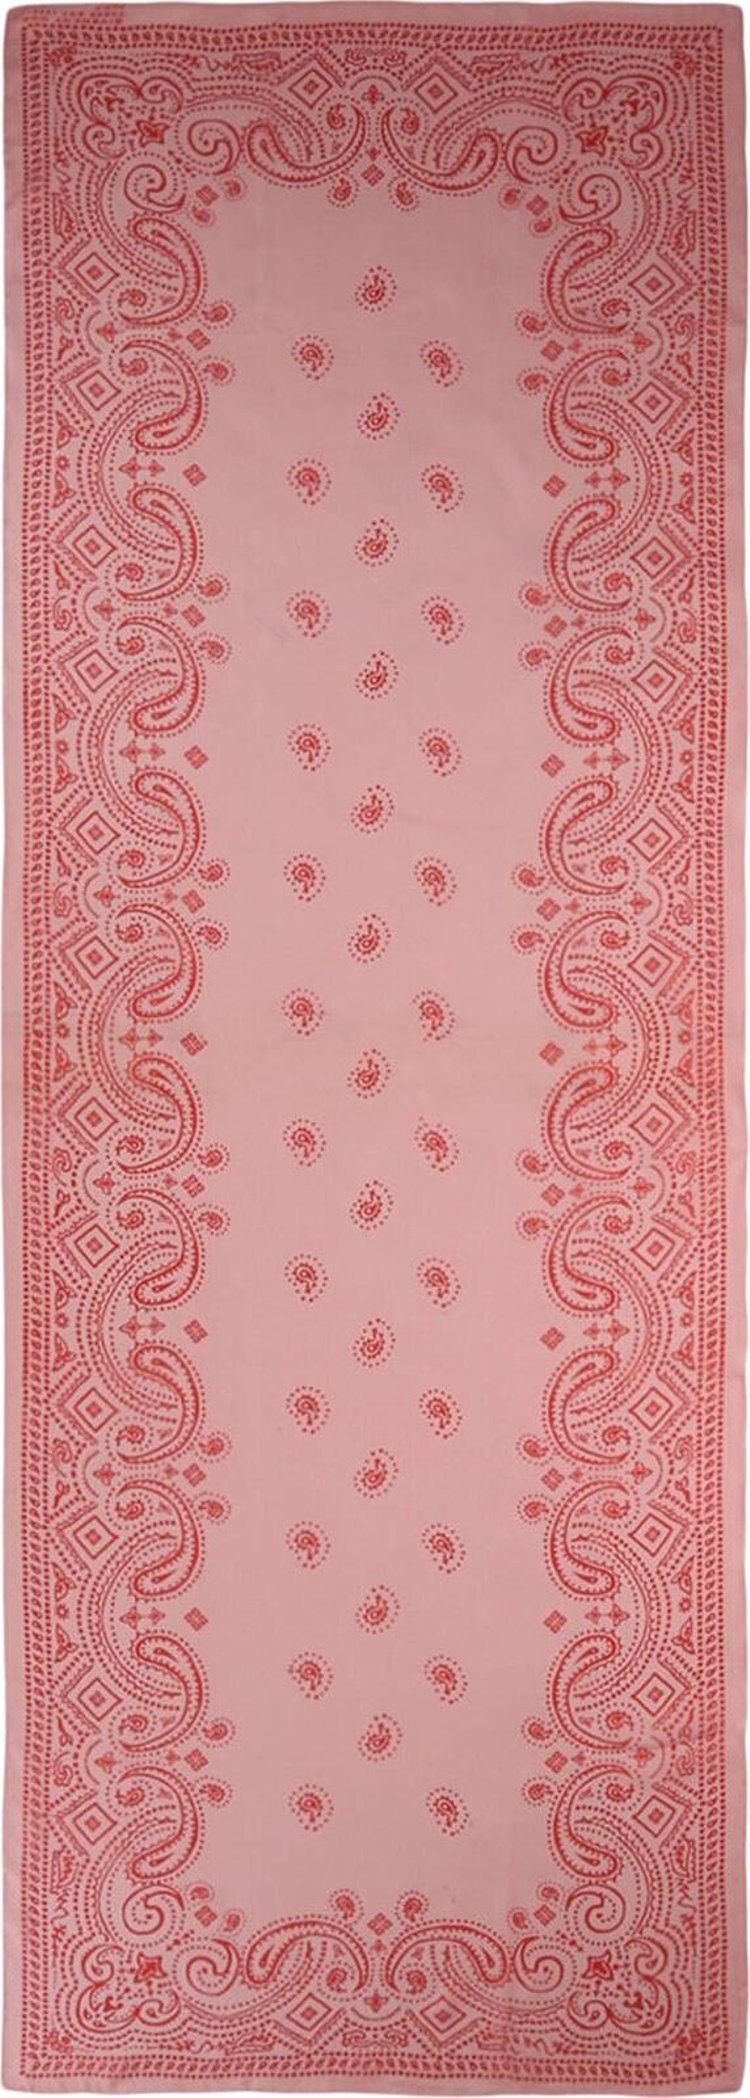 Givenchy Bandana Print Scarf 'Pink/Red'